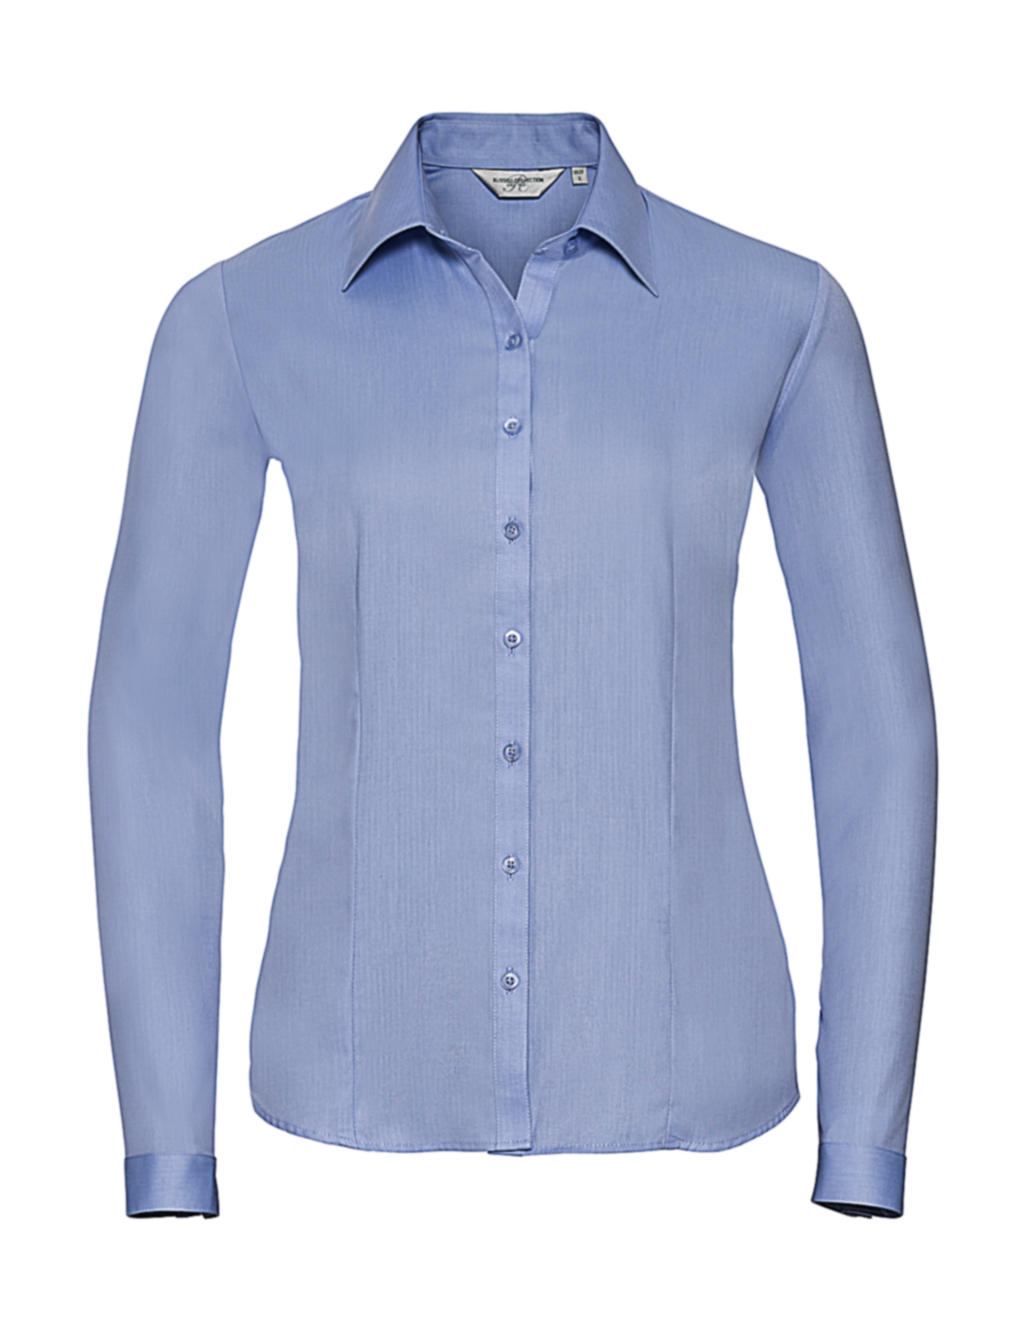  Ladies LS Herringbone Shirt in Farbe Light Blue